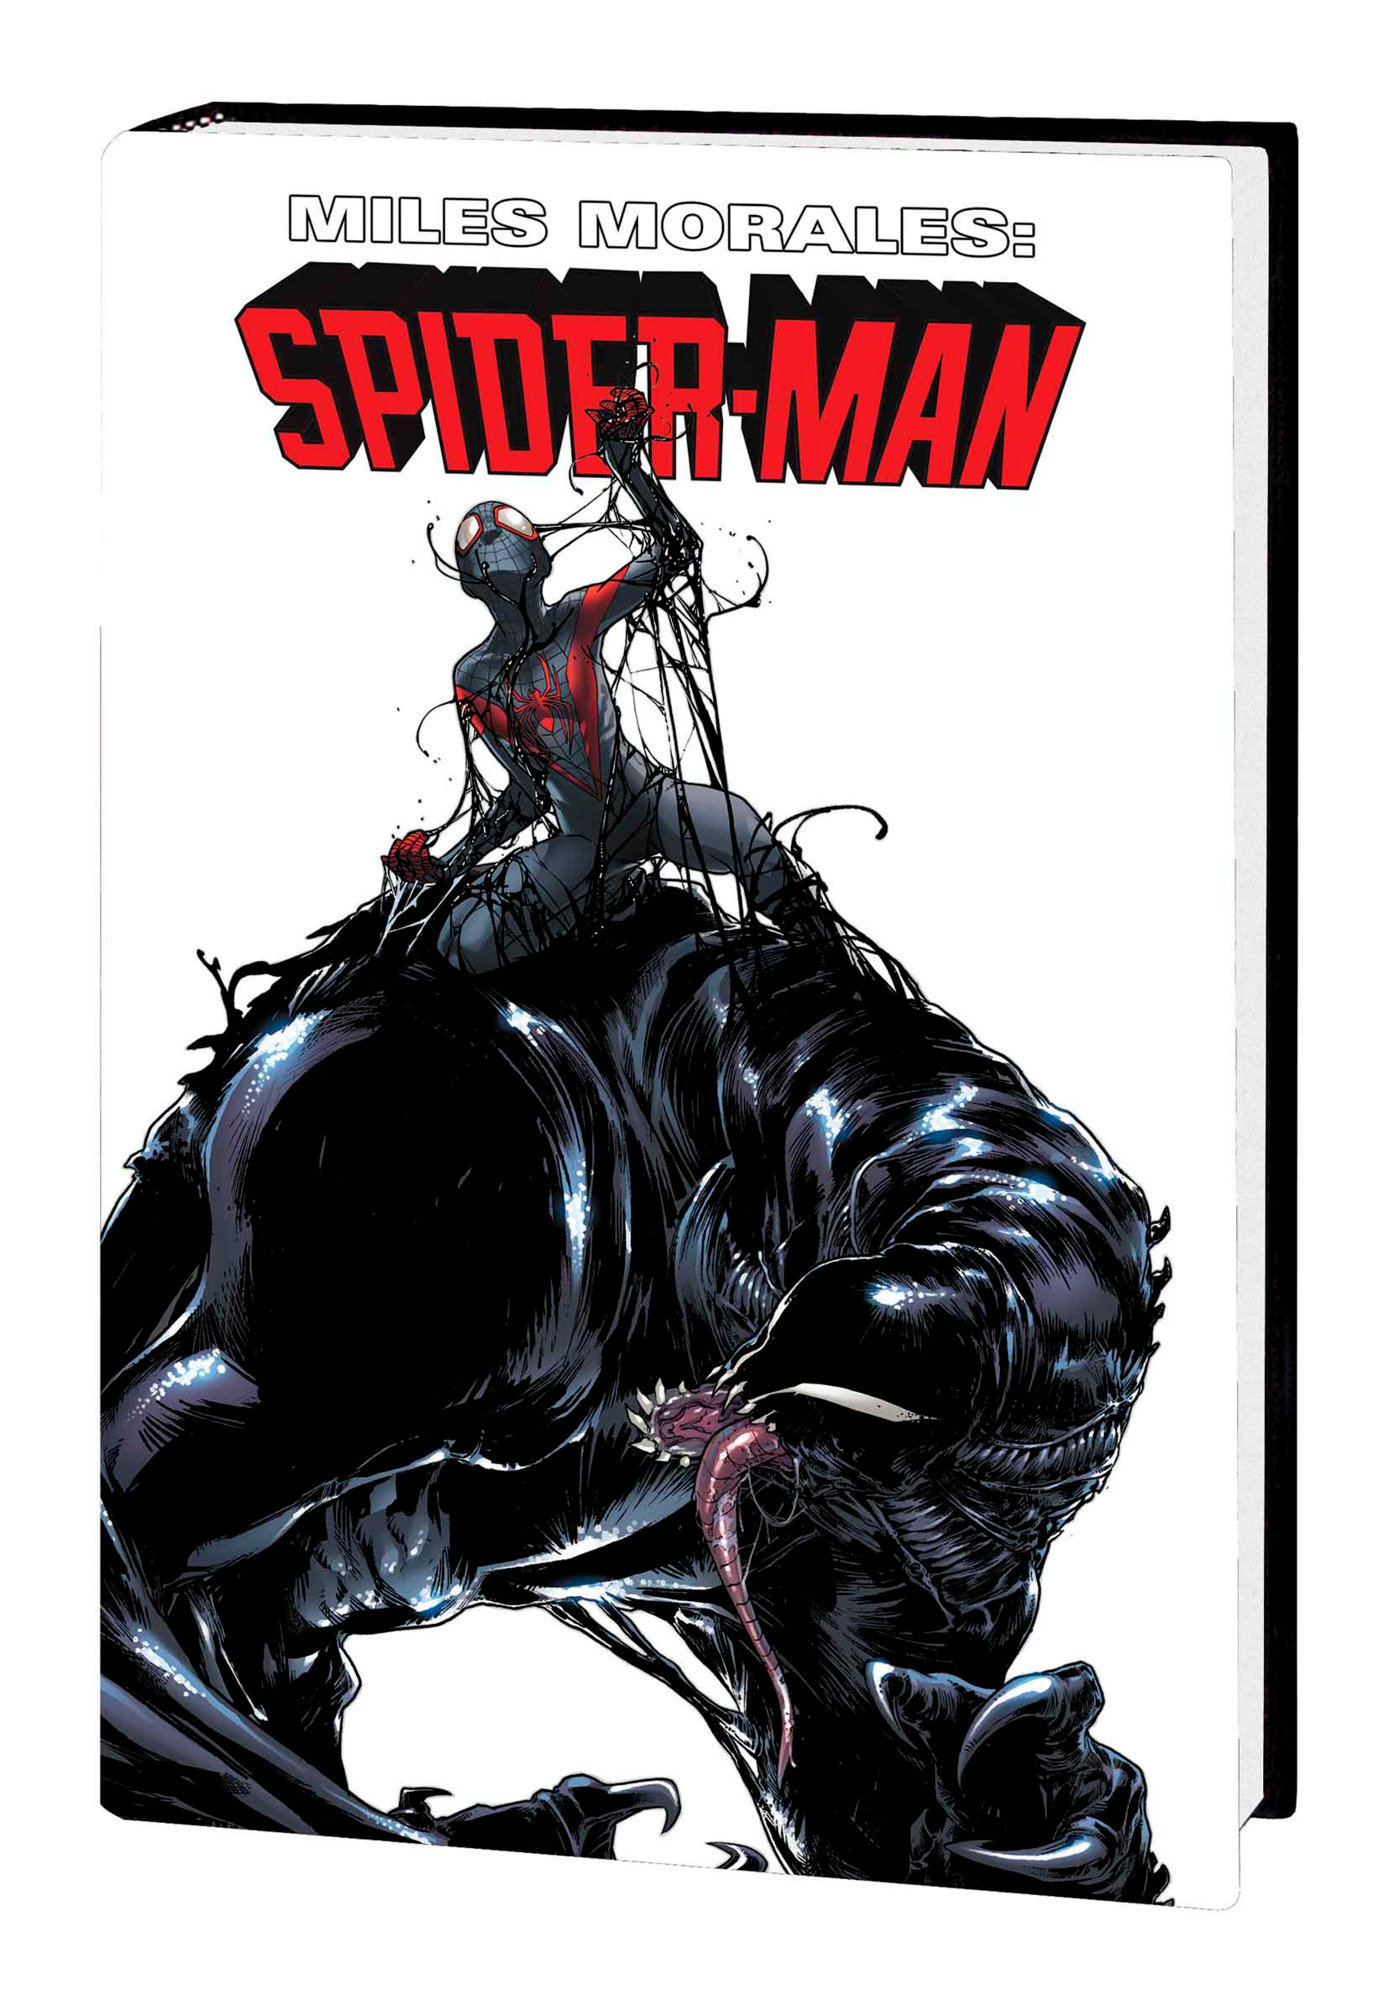 Miles Morales: Spider-Man Omnibus Hardcover Volume 1 Pichelli Direct Market Variant